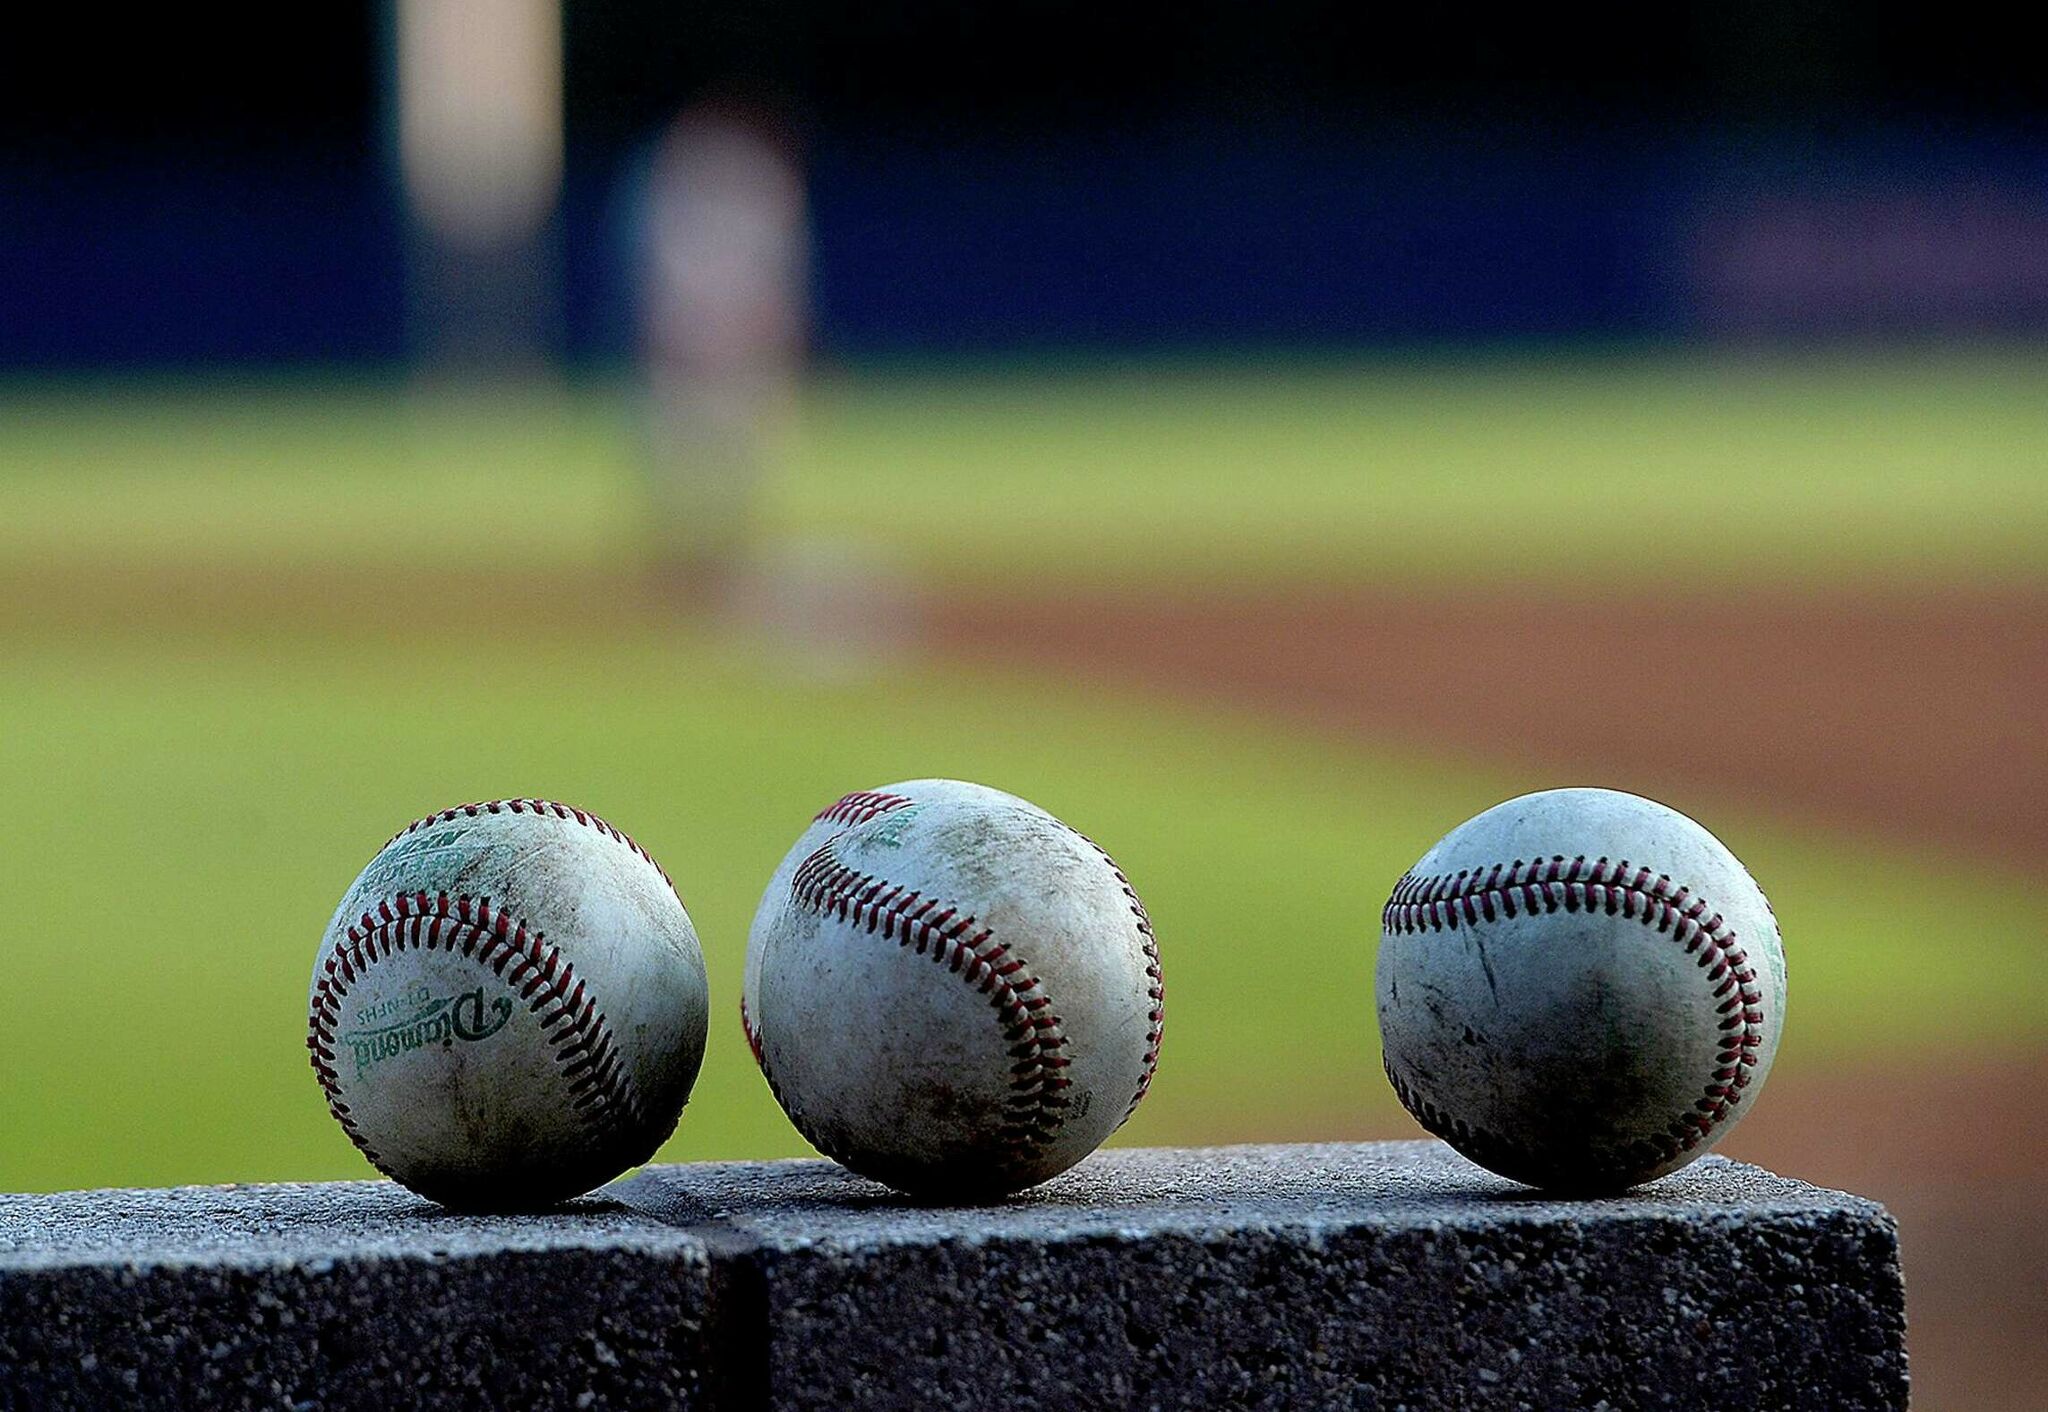 Southeast Texas teams begin UIL baseball playoffs